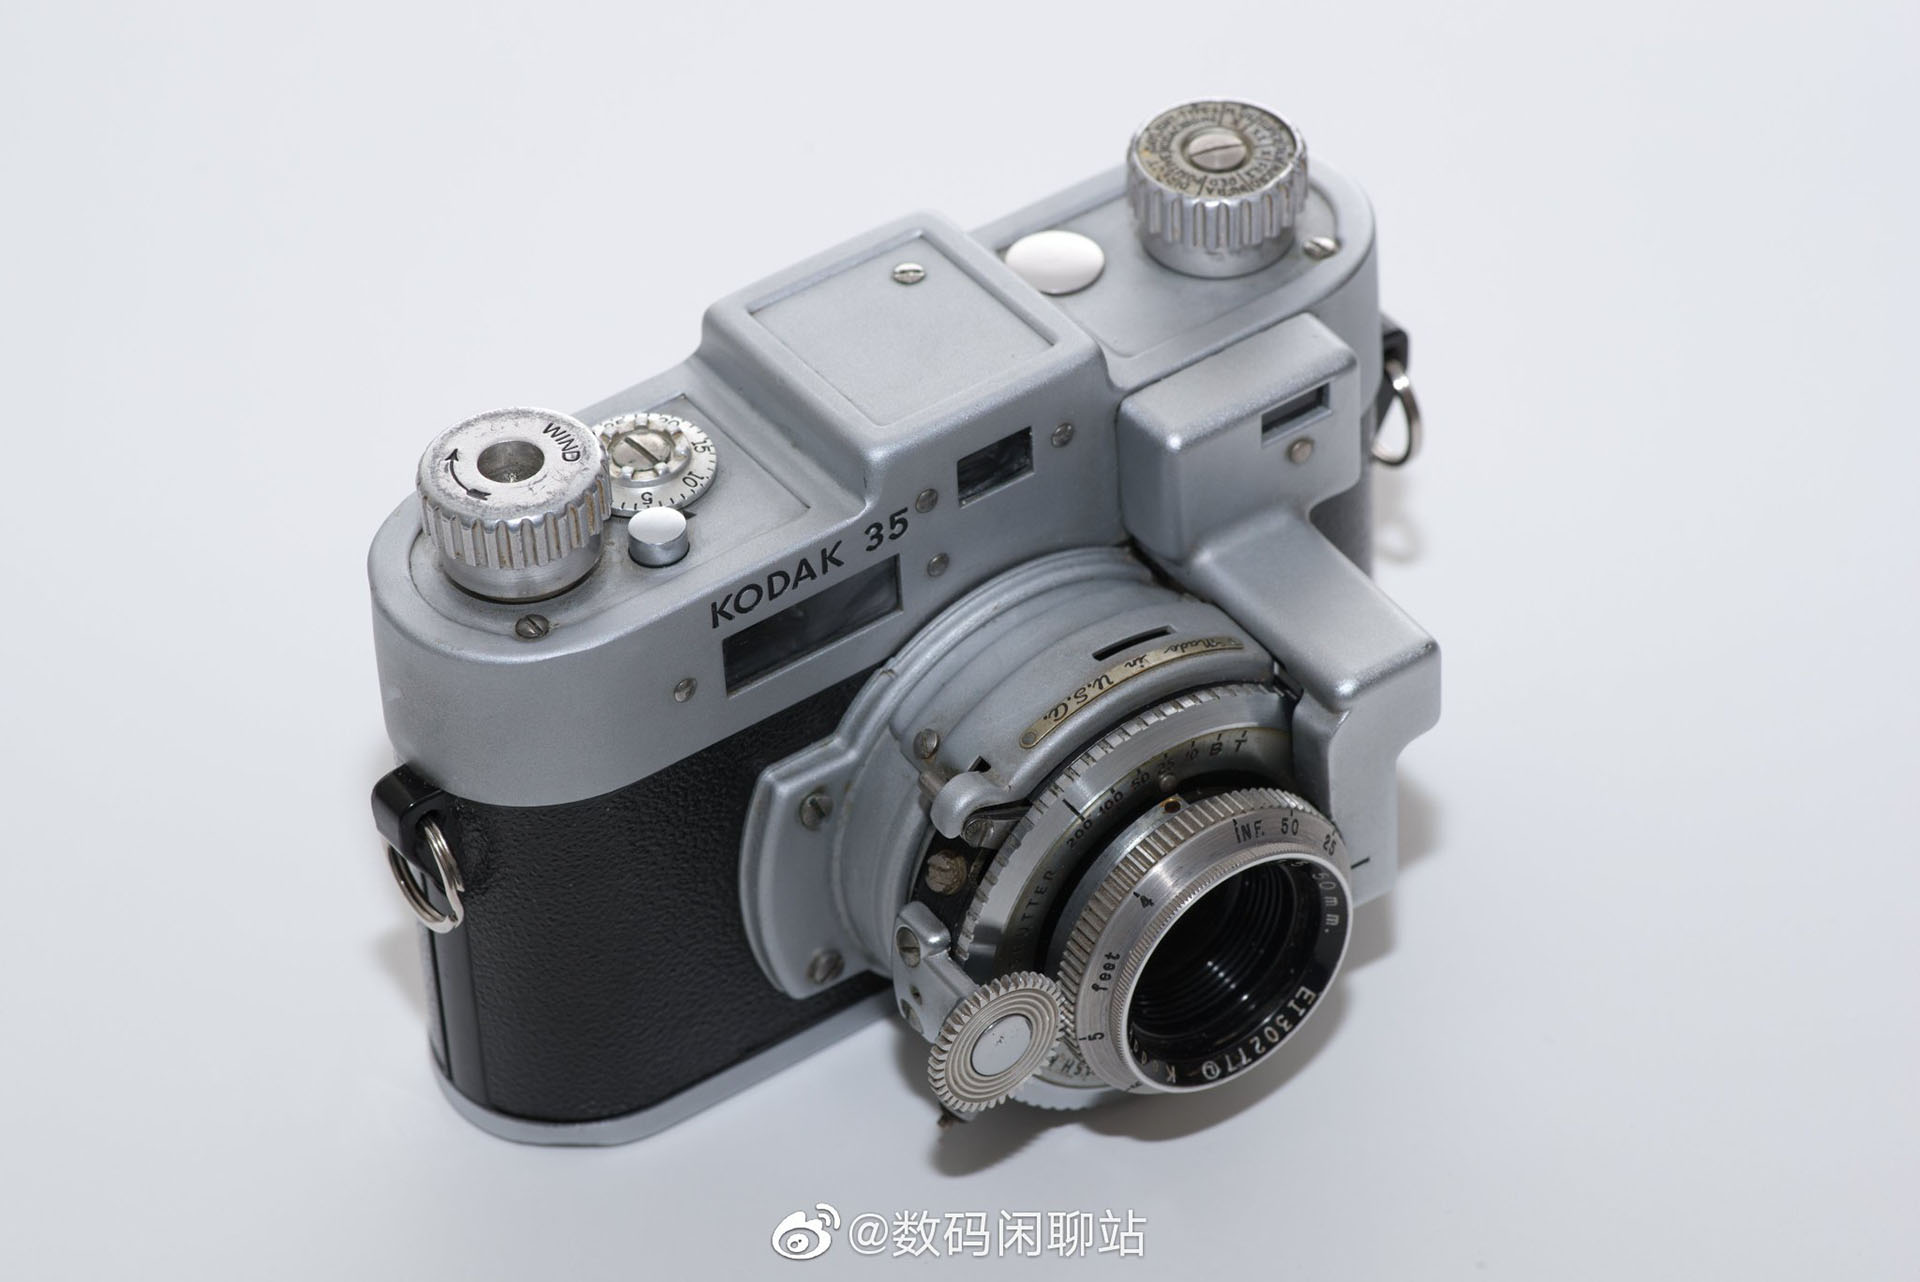 OPPO hợp tác với Kodak ra mắt Find X3 Pro Photographer Edition